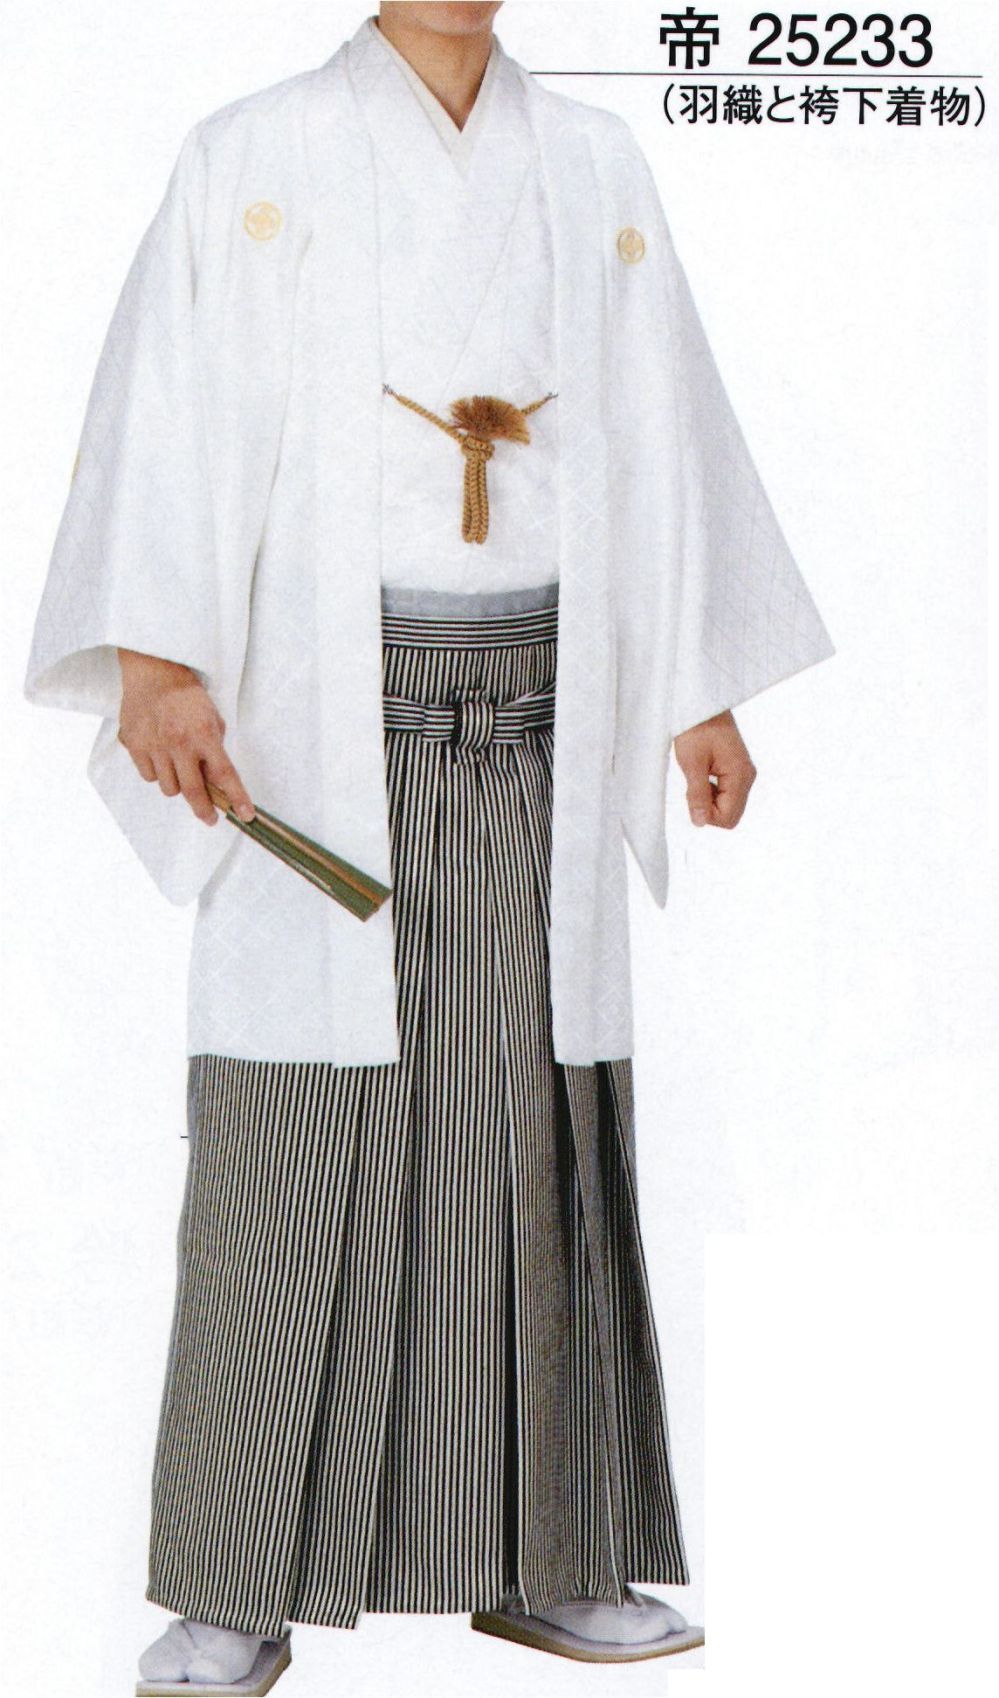 綸子羽織と袴下着物・袴セット 着物 羽織 袴 K-180-25233 4号（身長 